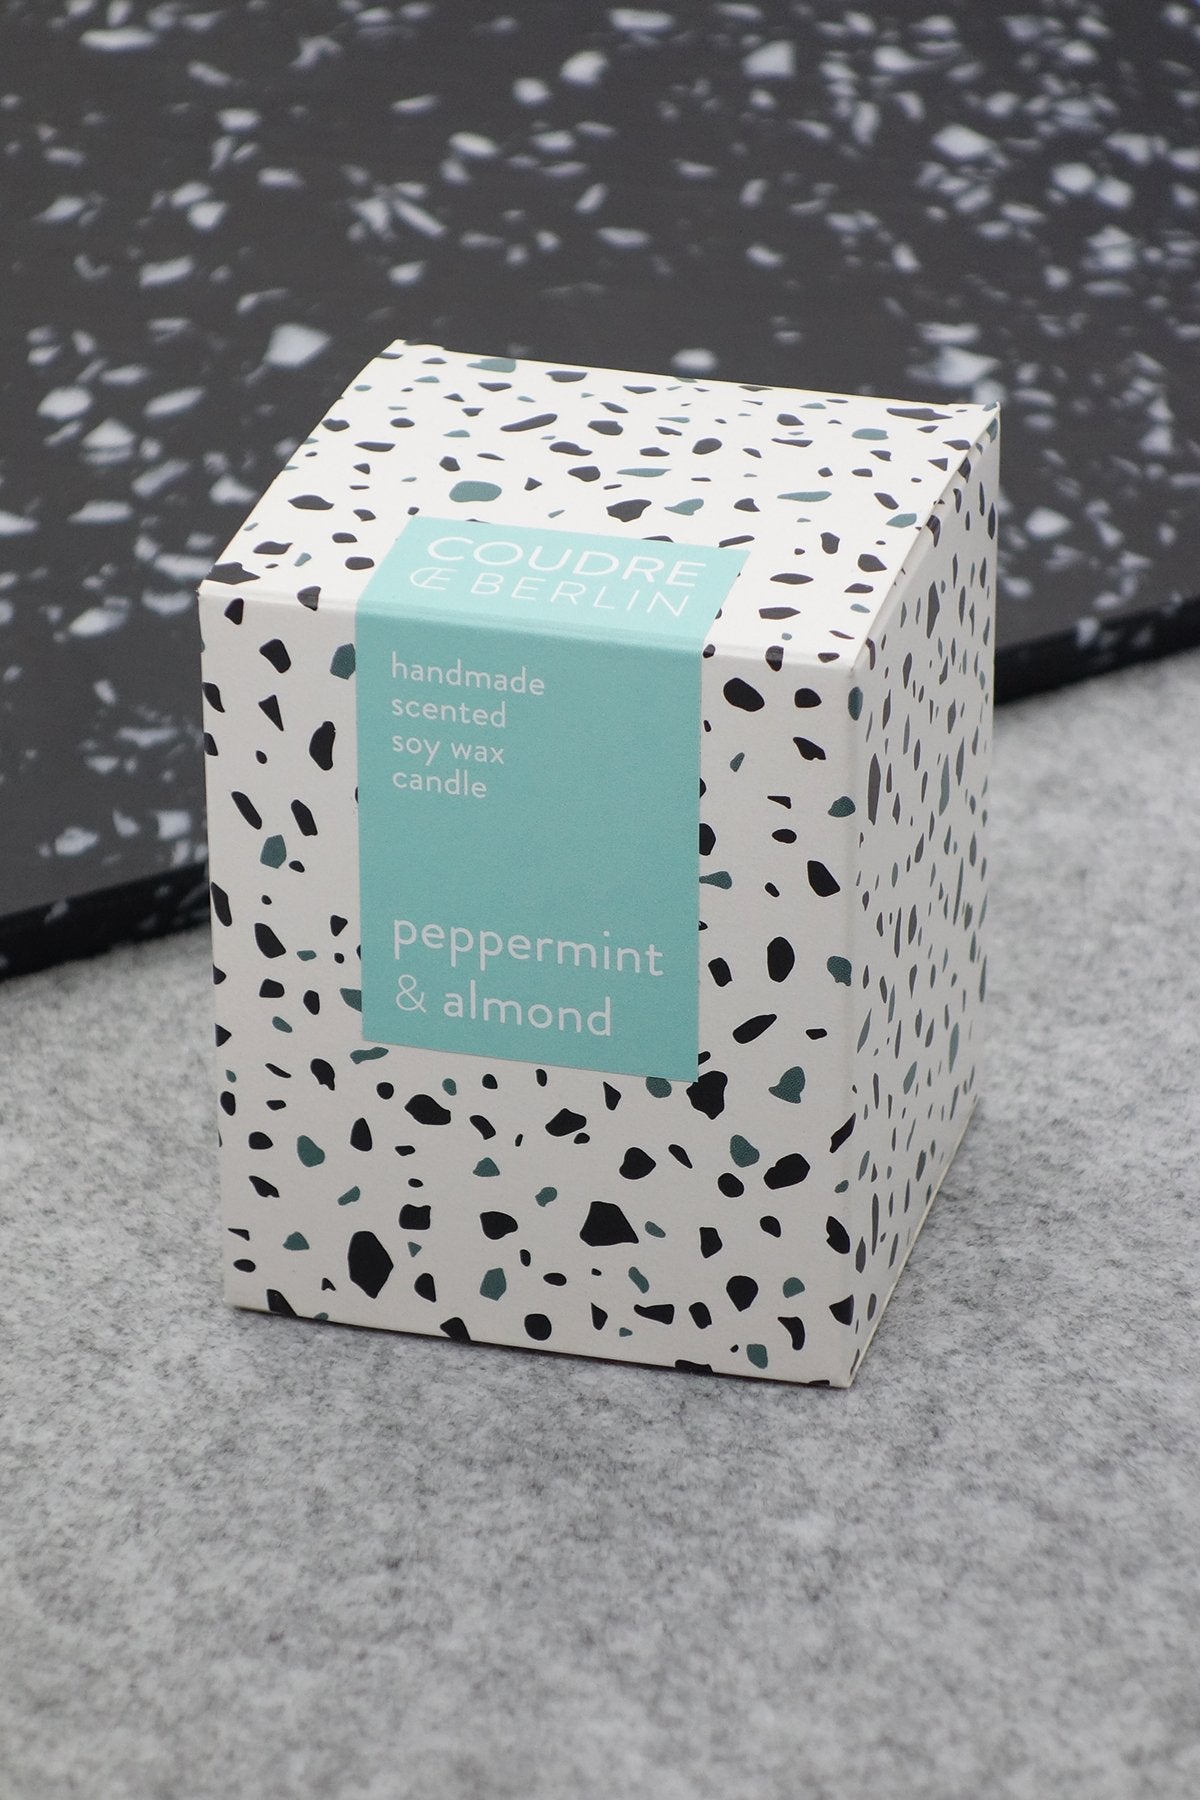 peppermint & almond / CONTEMPORARIES Duftkerze - Coudre Berlin